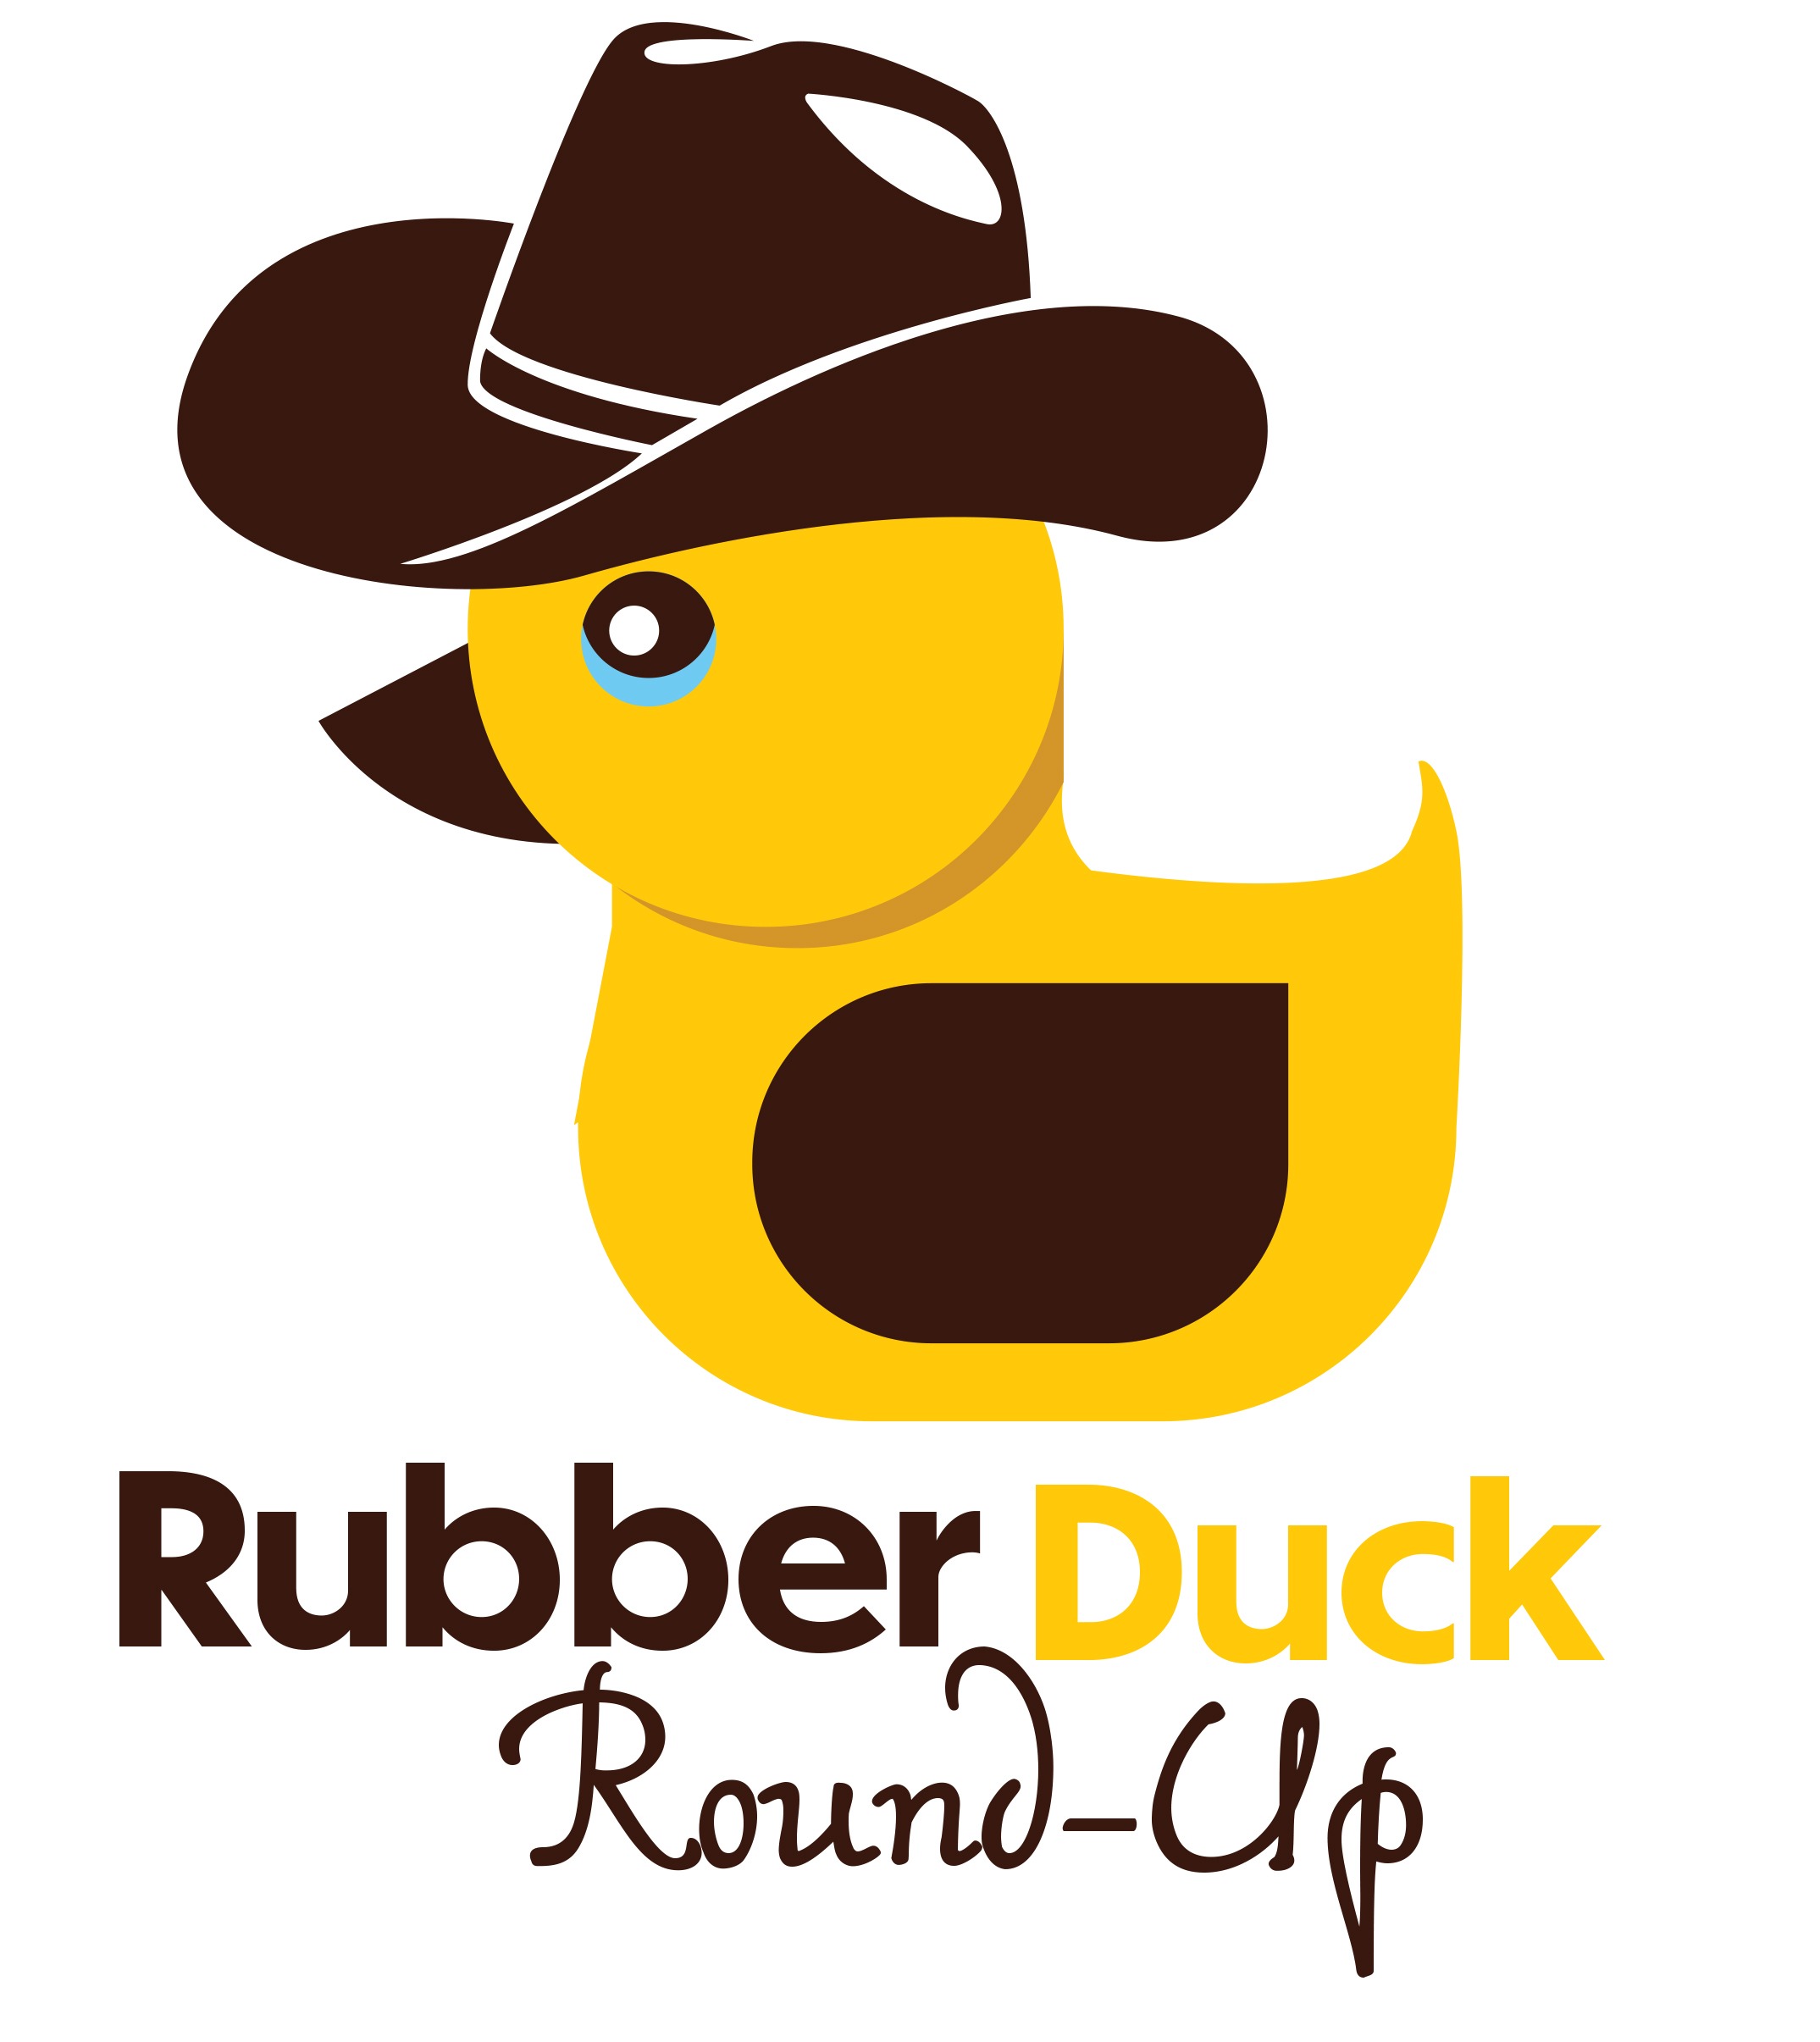 rubber duck roundup logo